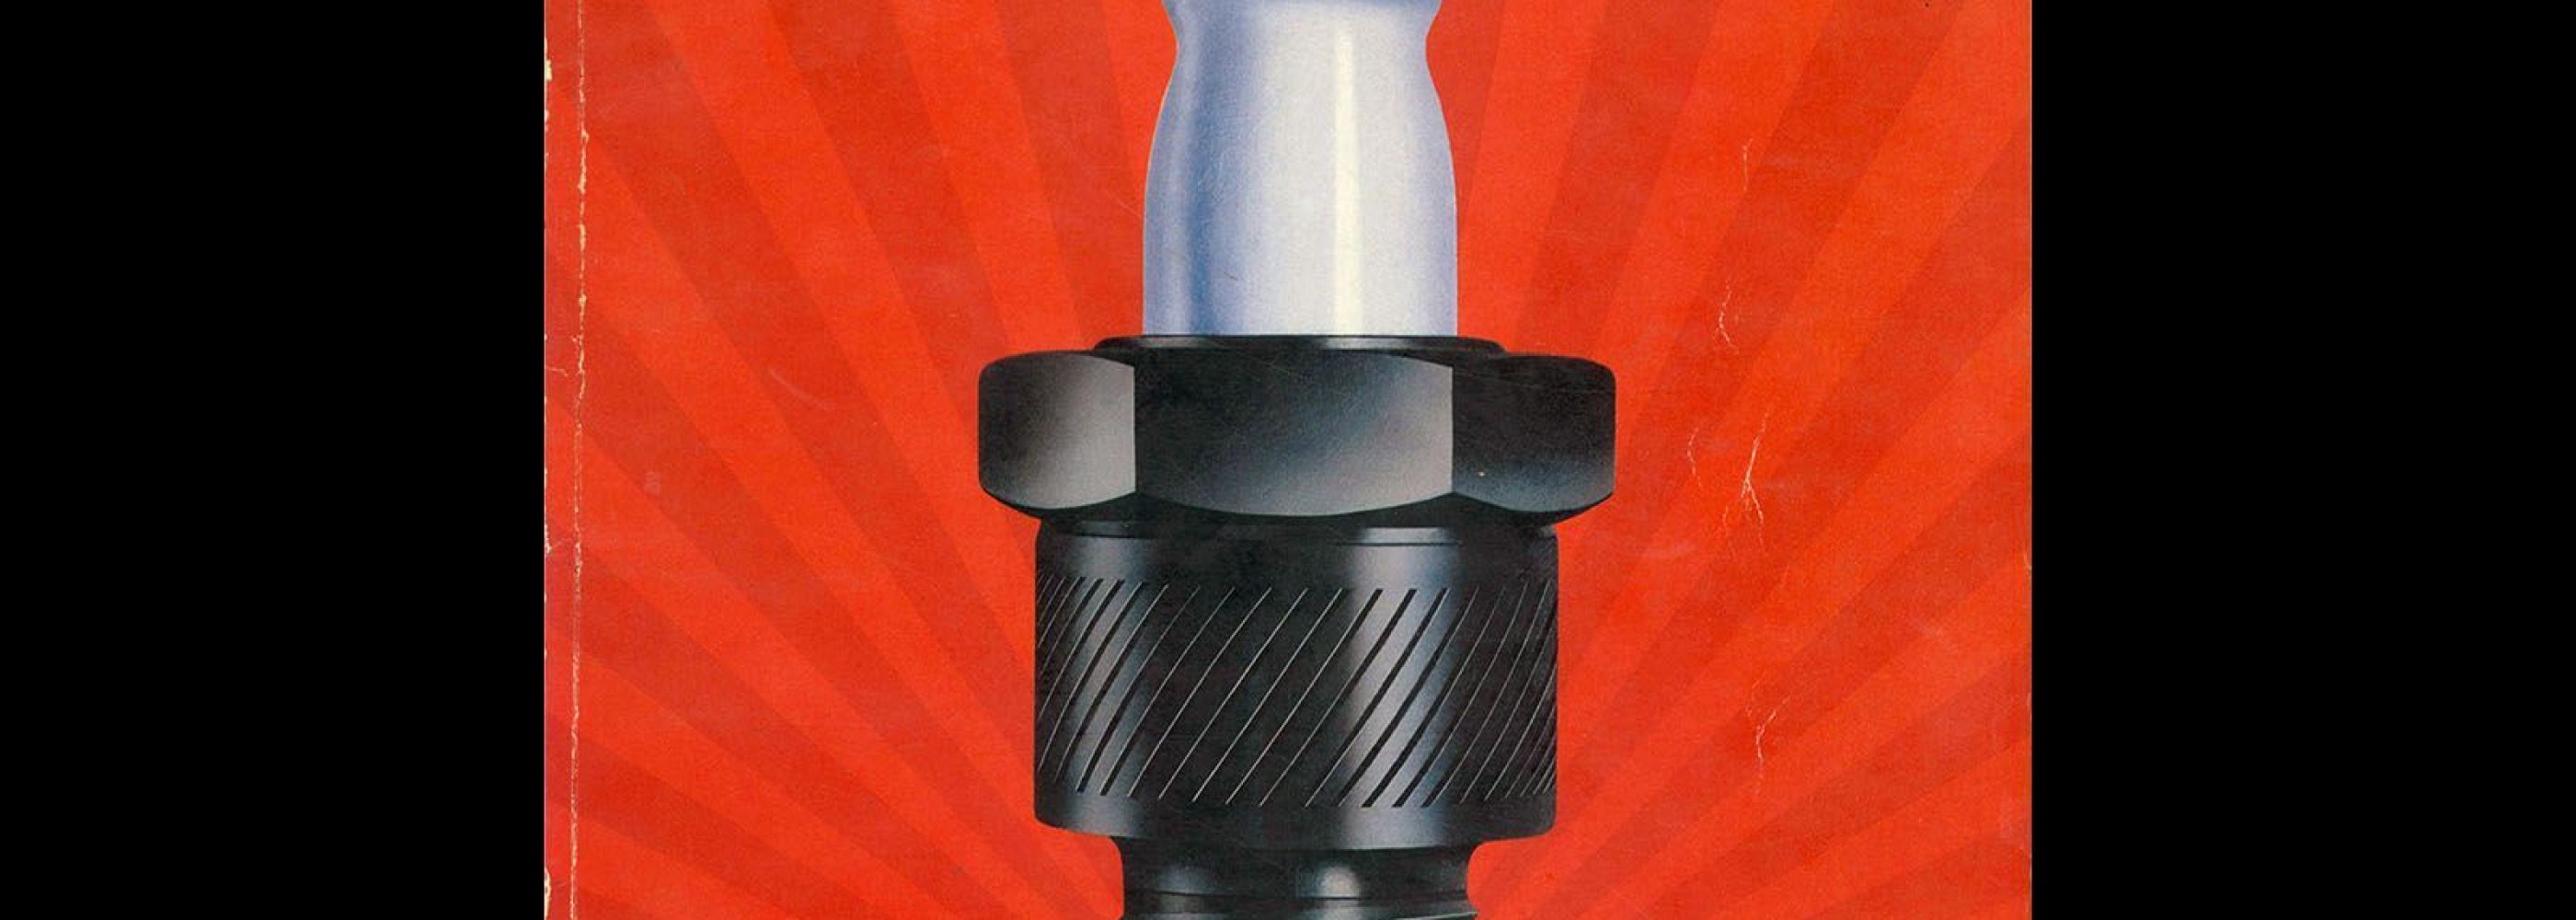 Idea 148, 1978-5. Cover design by Richard Mantel